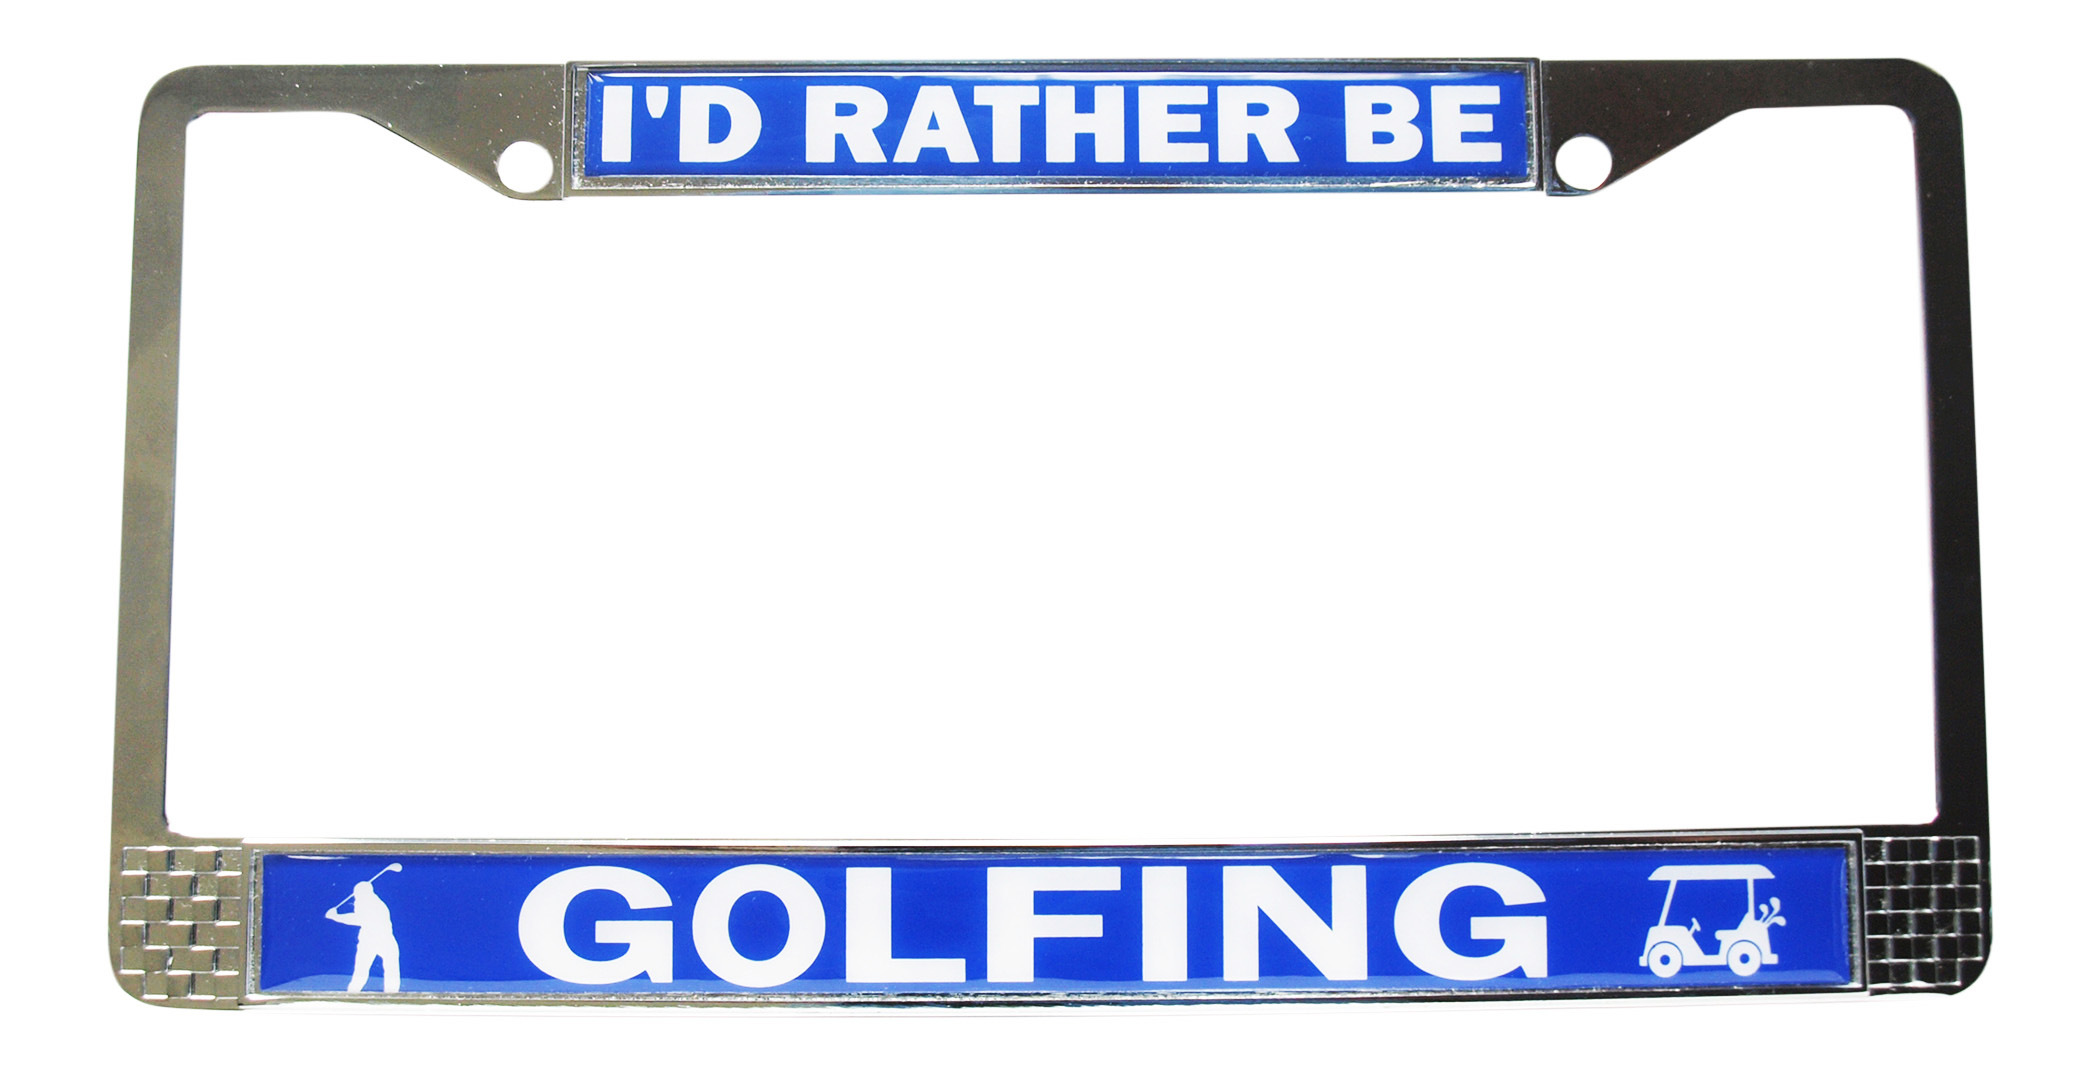 I'd Rather Be Golfing License Plate Frame